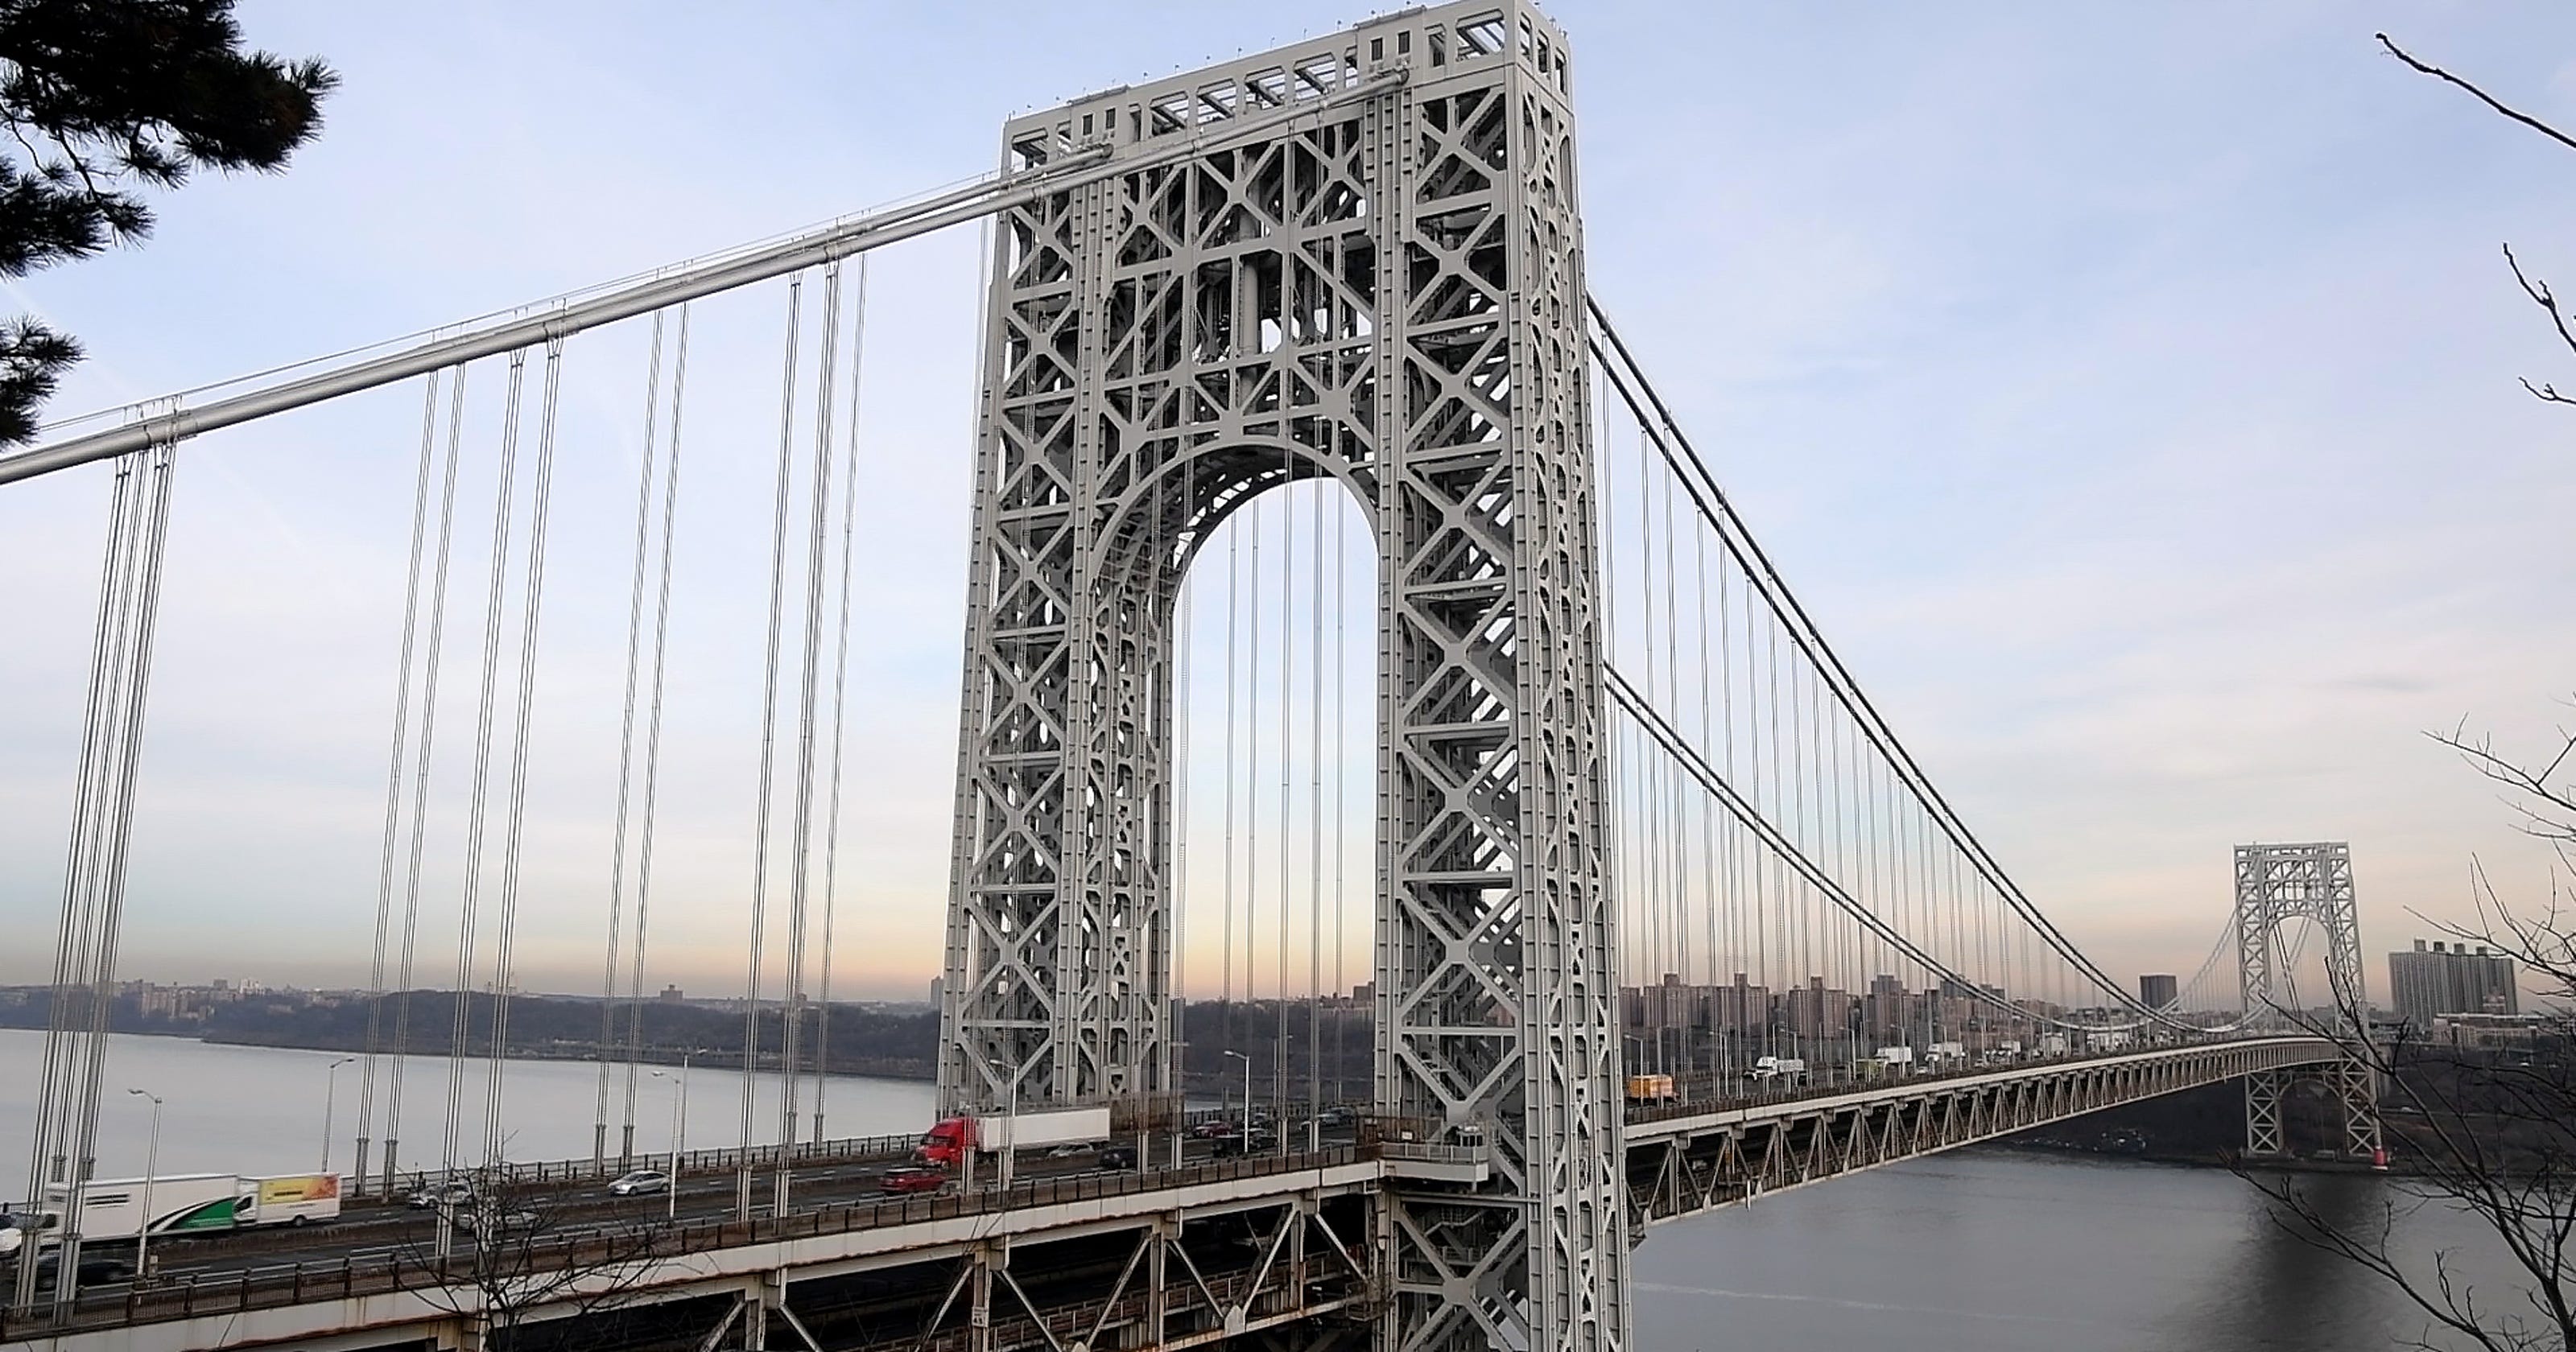 Man dies in jump from Washington Bridge